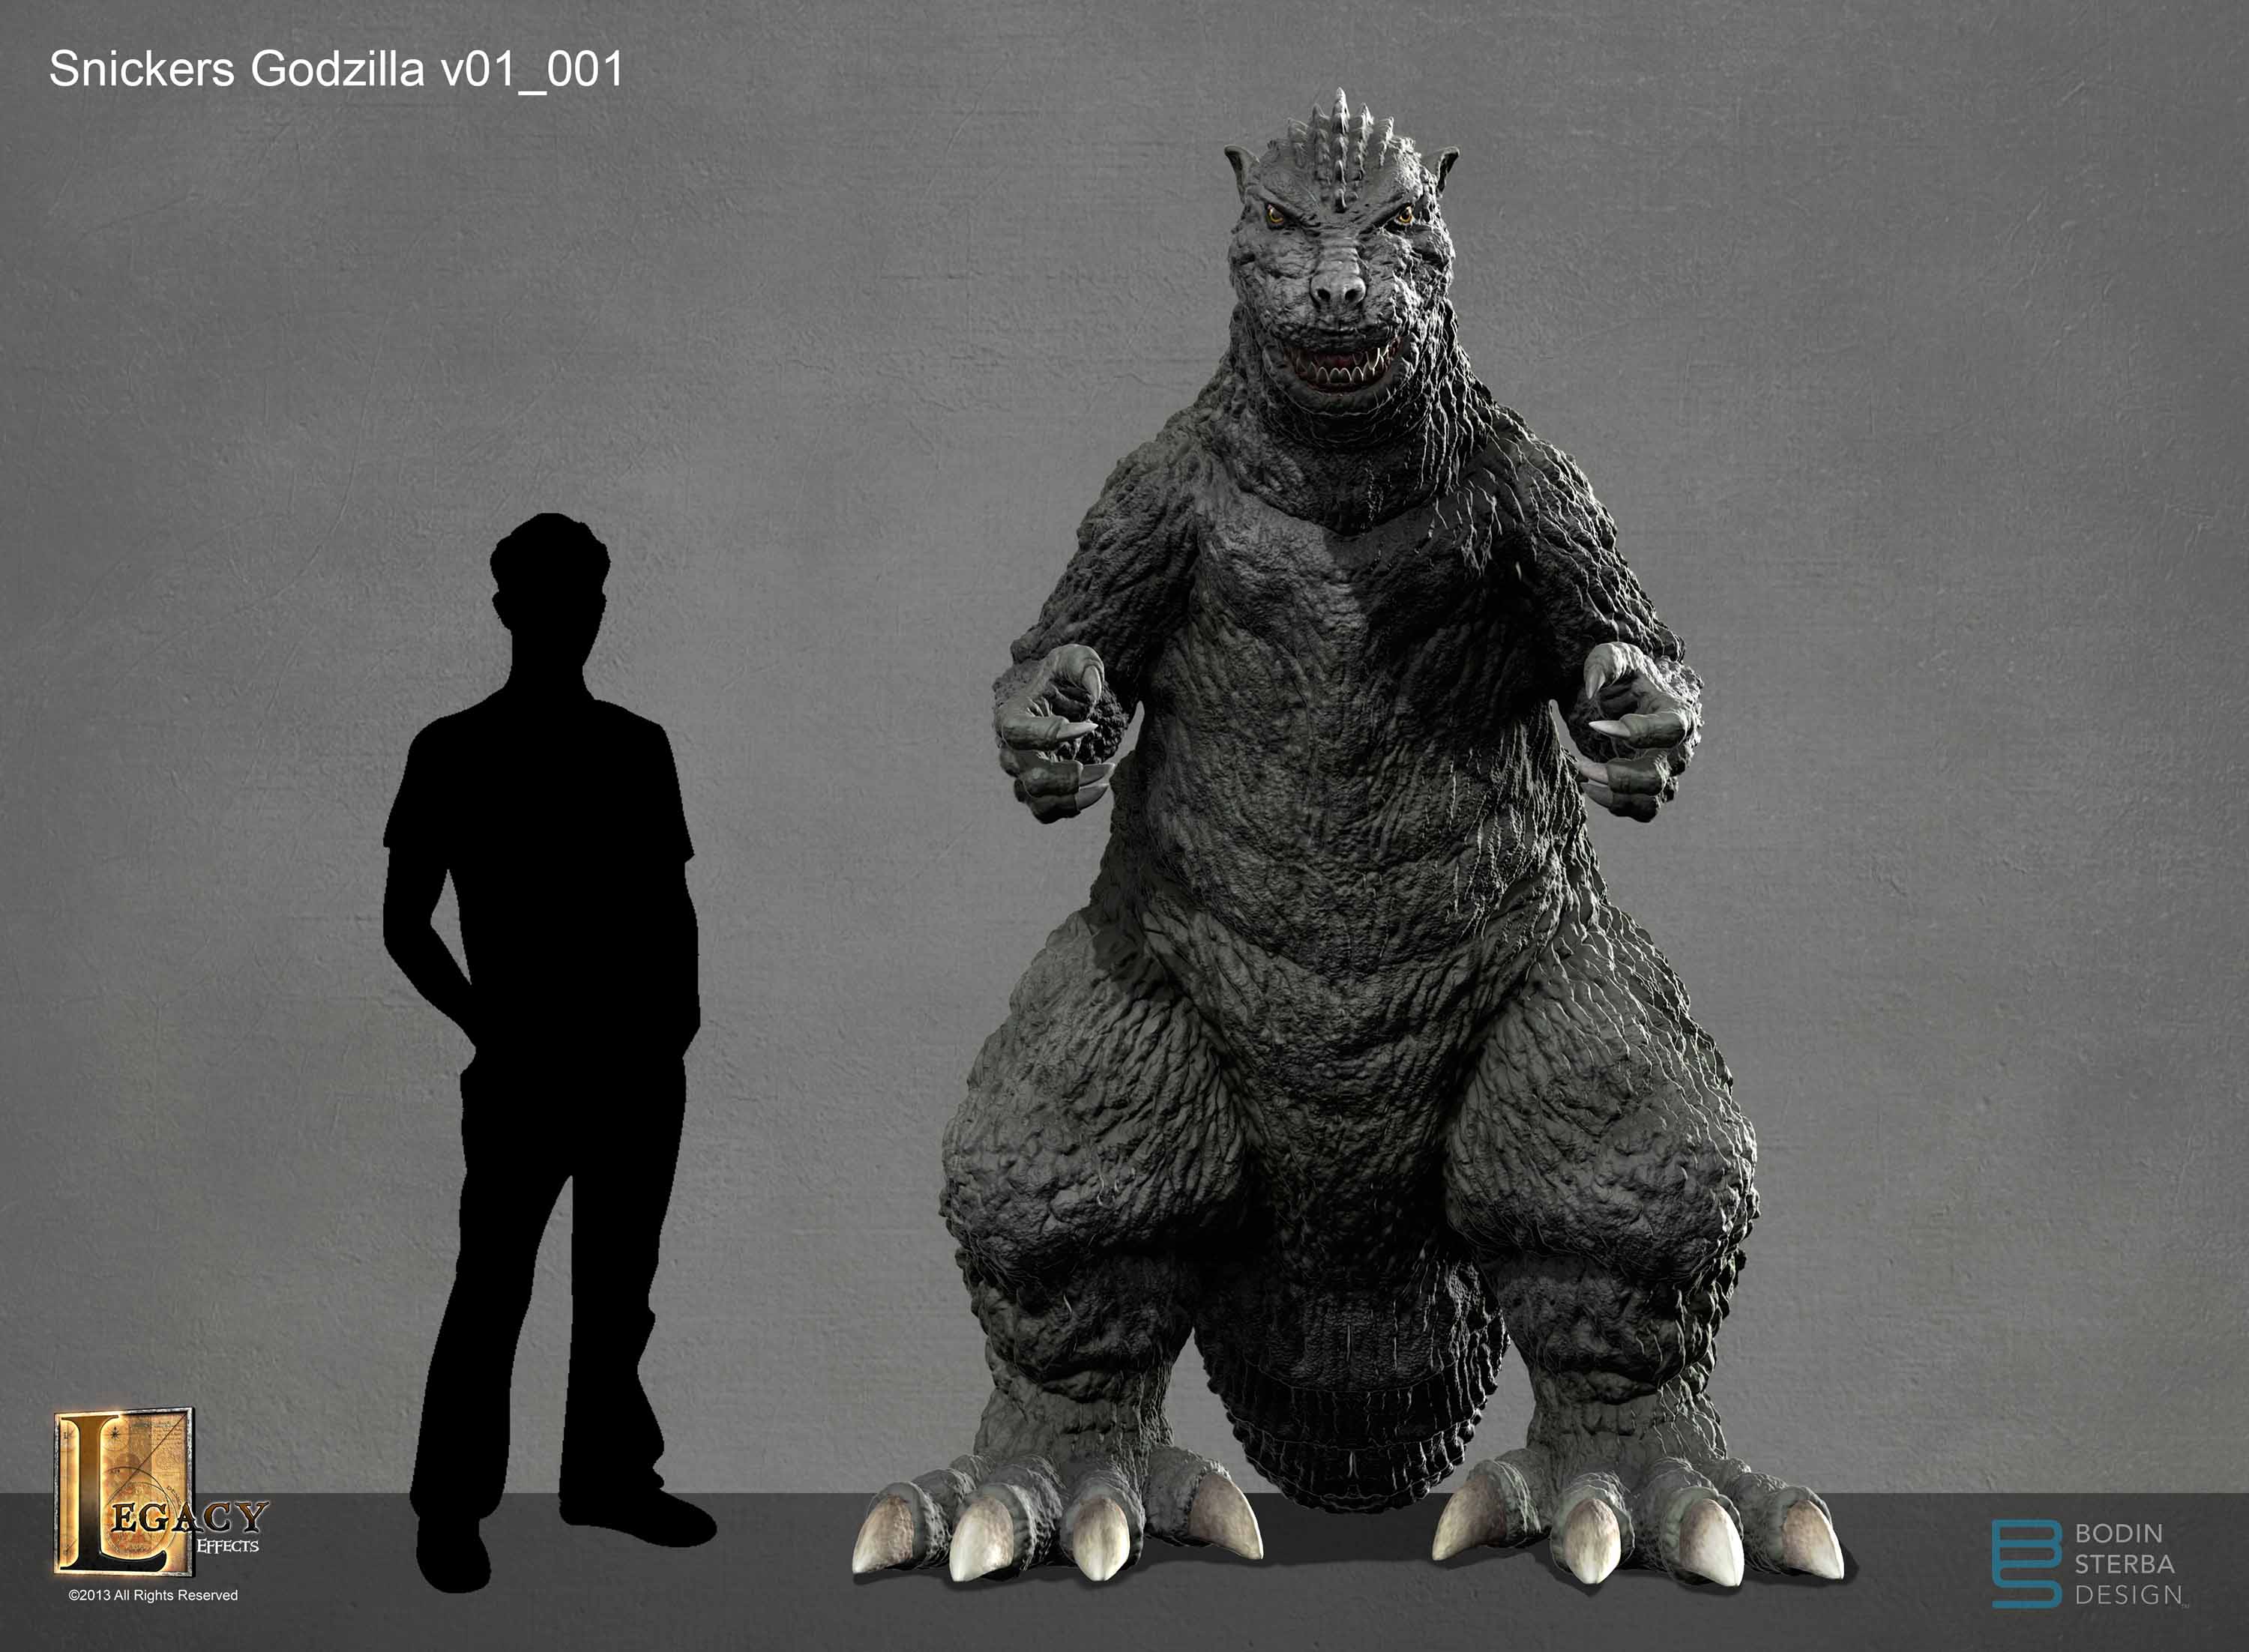 Snickers Godzilla design- front